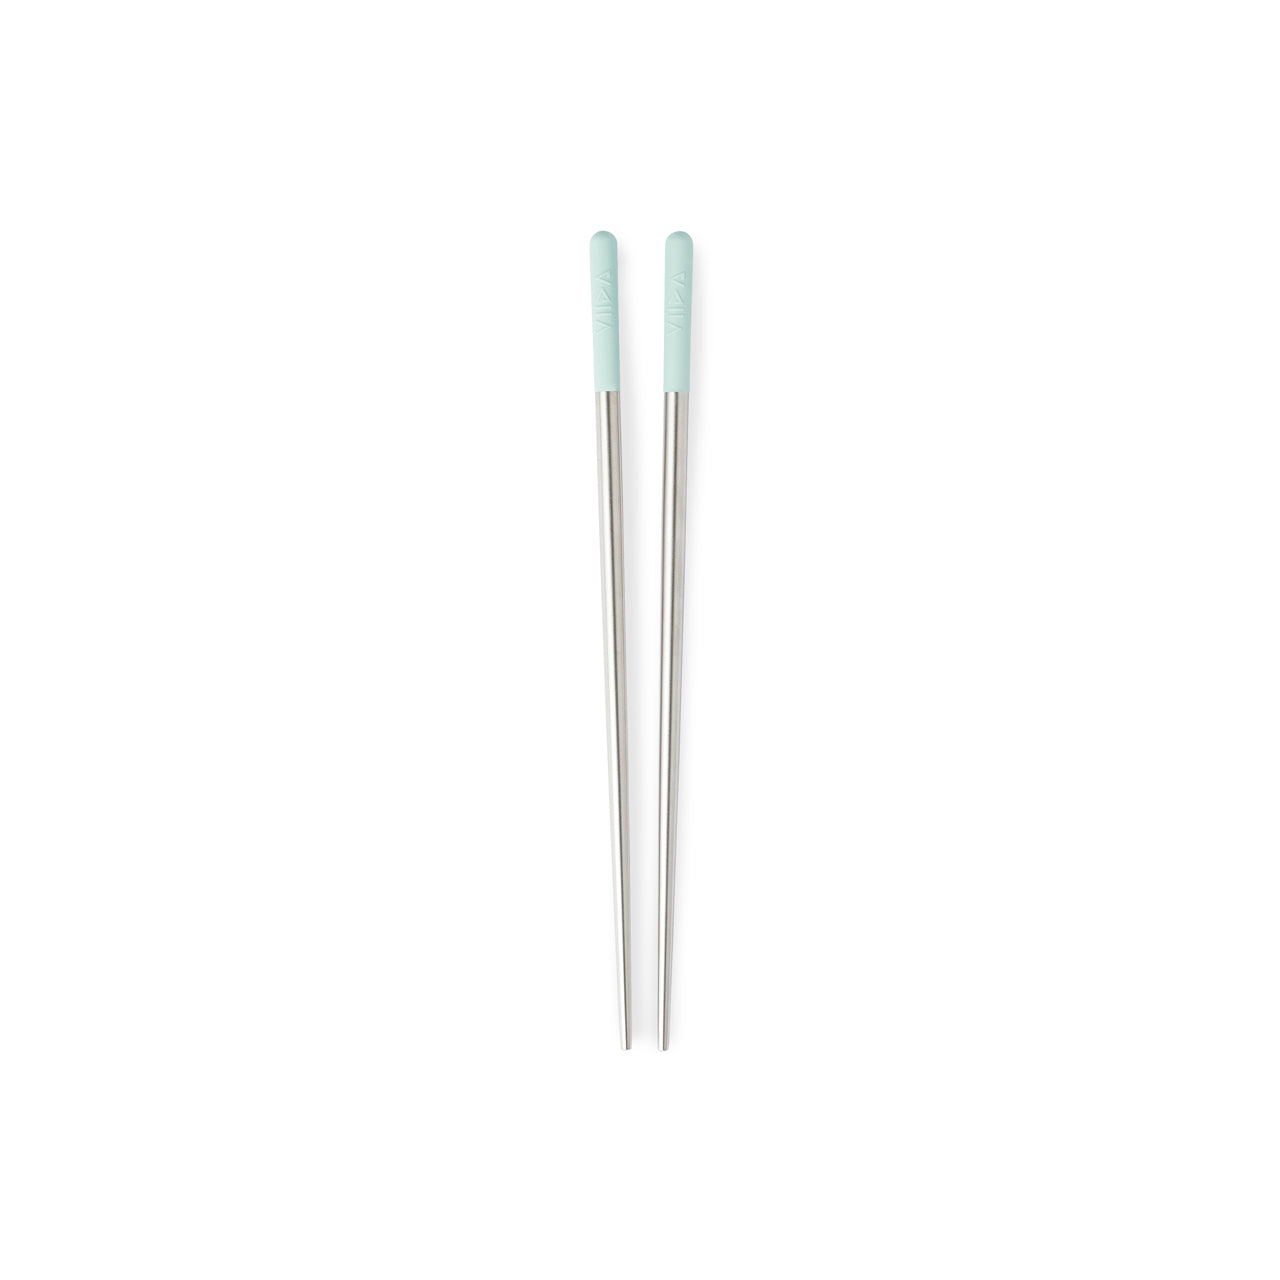 Pali Stainless Steel Chopsticks